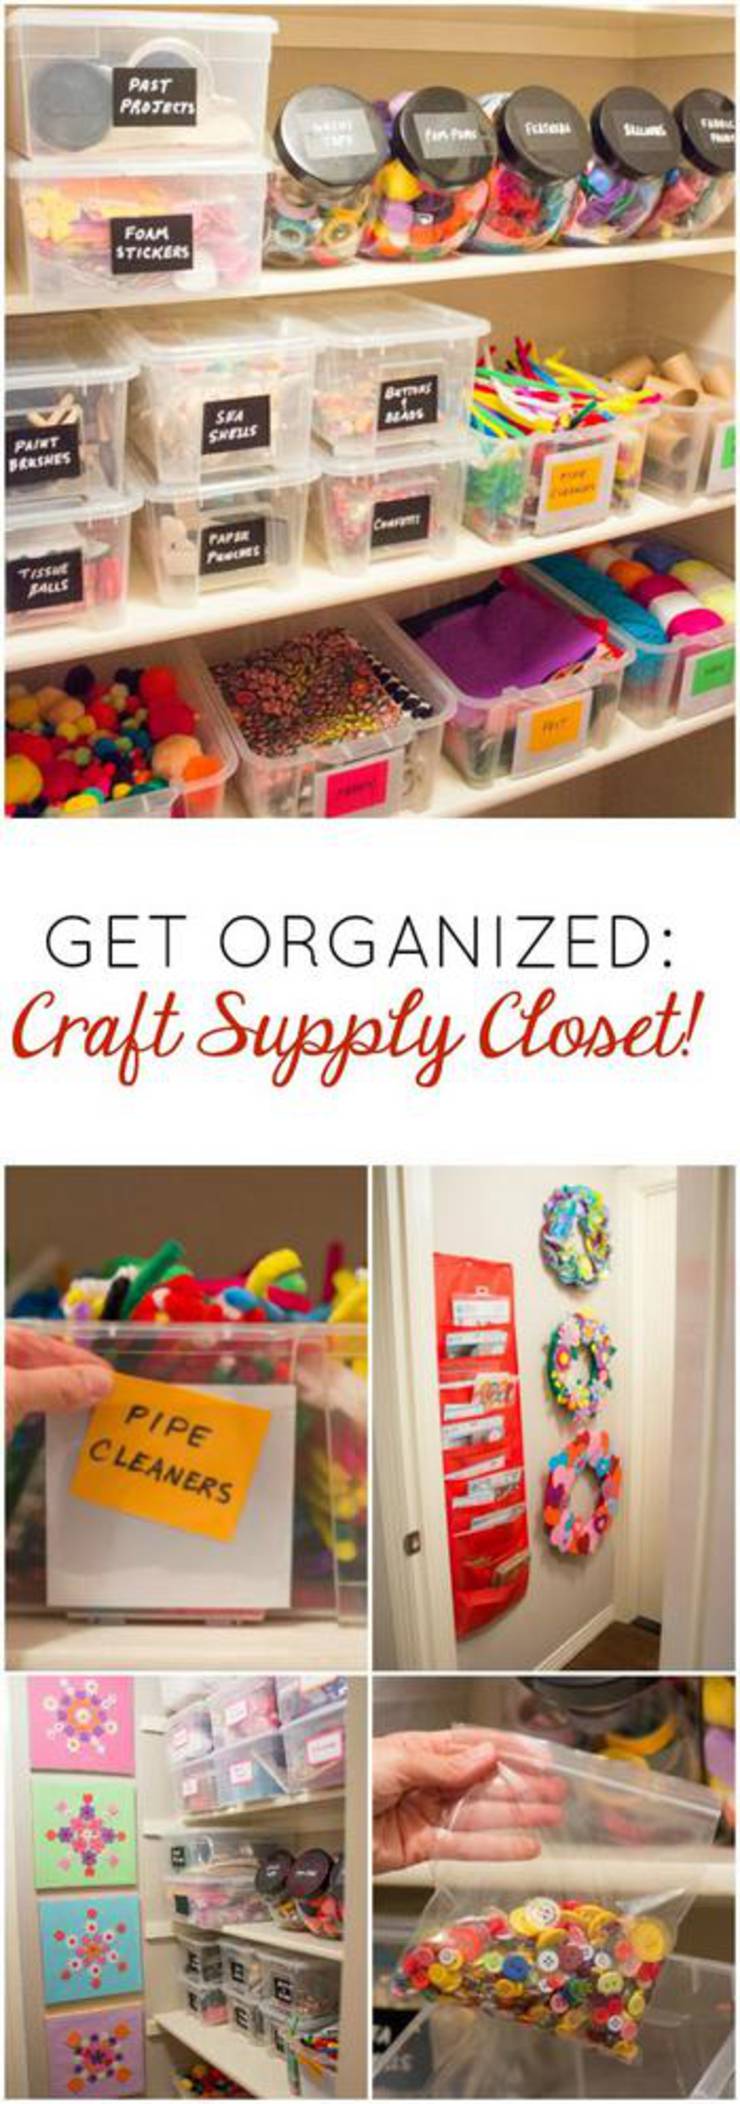 diy crafts for home organization